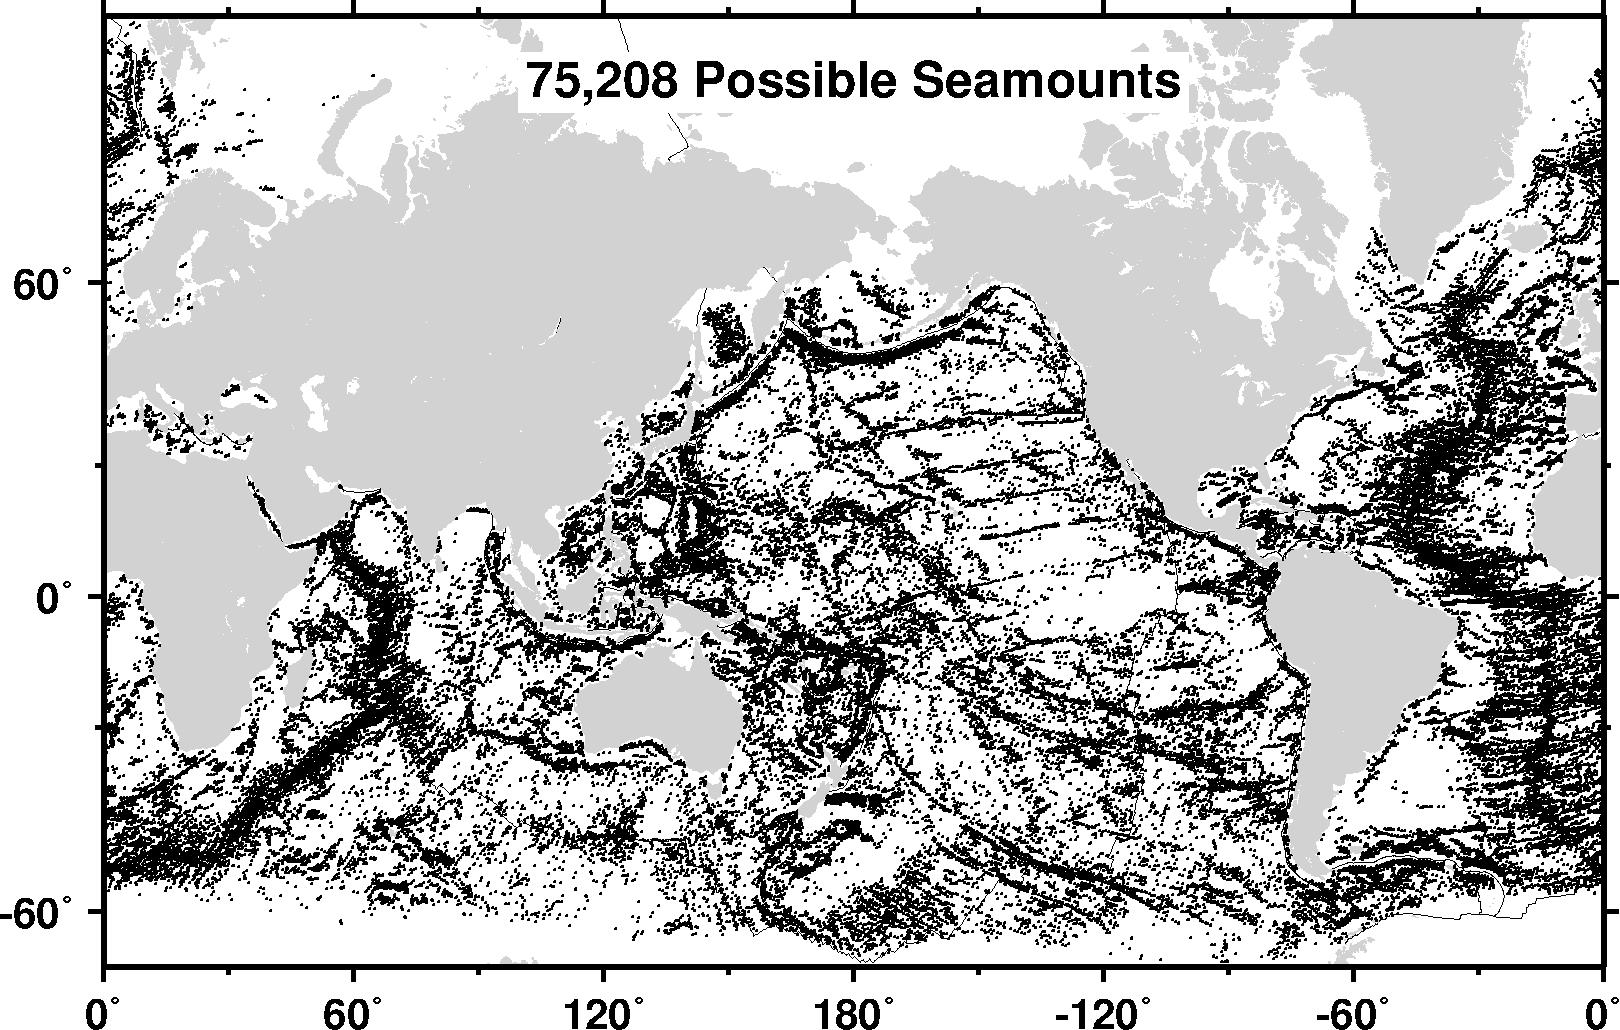 Figure 2. Possible Seamounts Detected